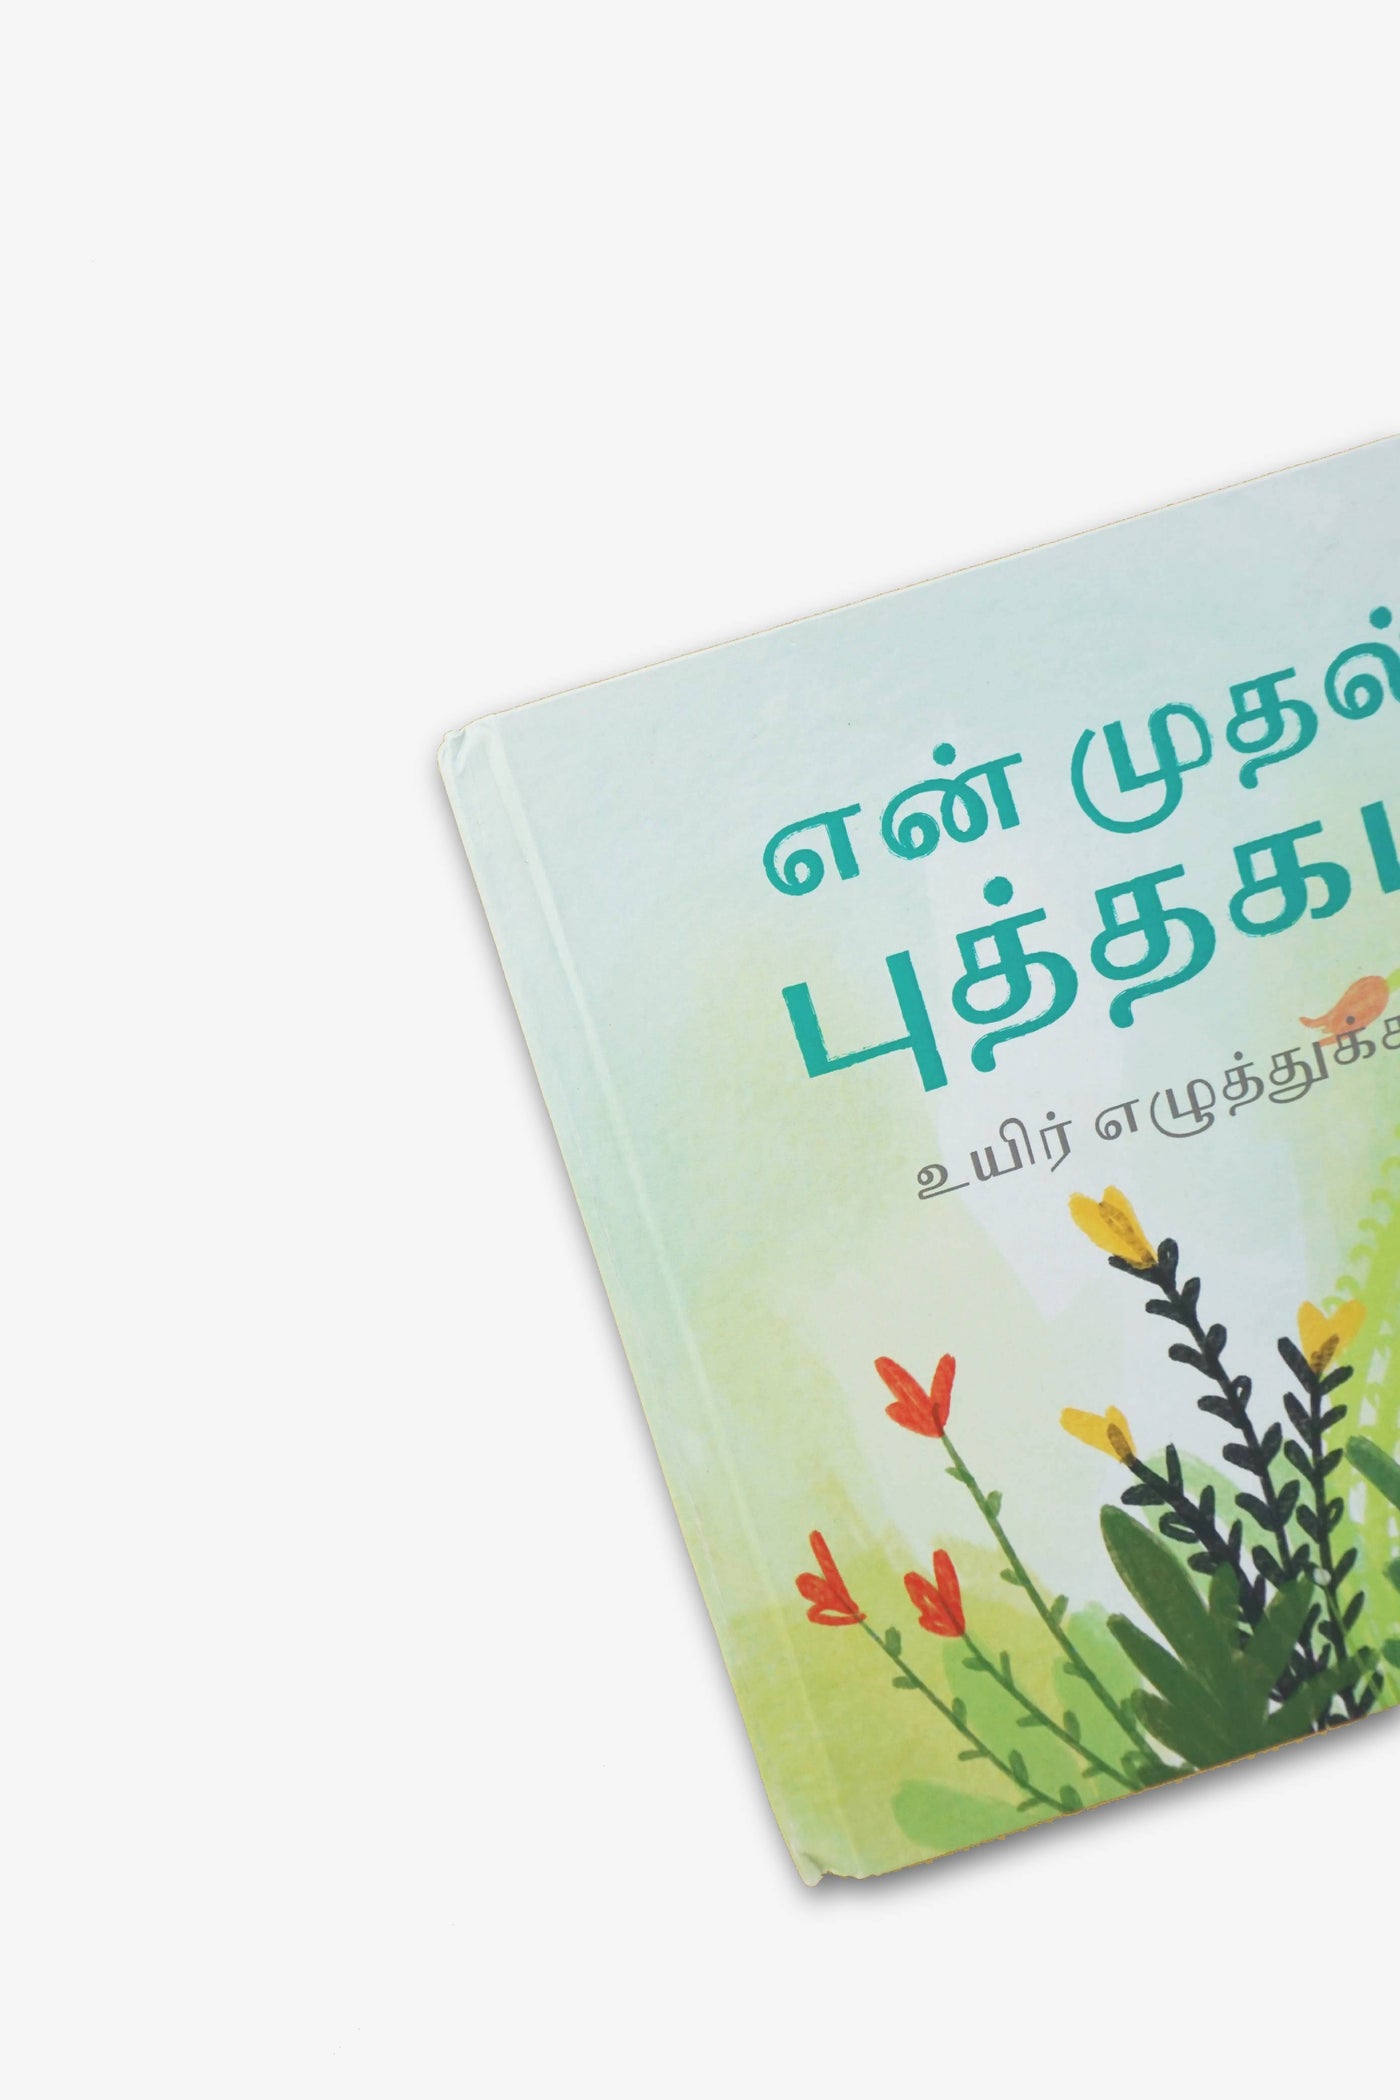 En Mudhal Puthakam - Tamil book